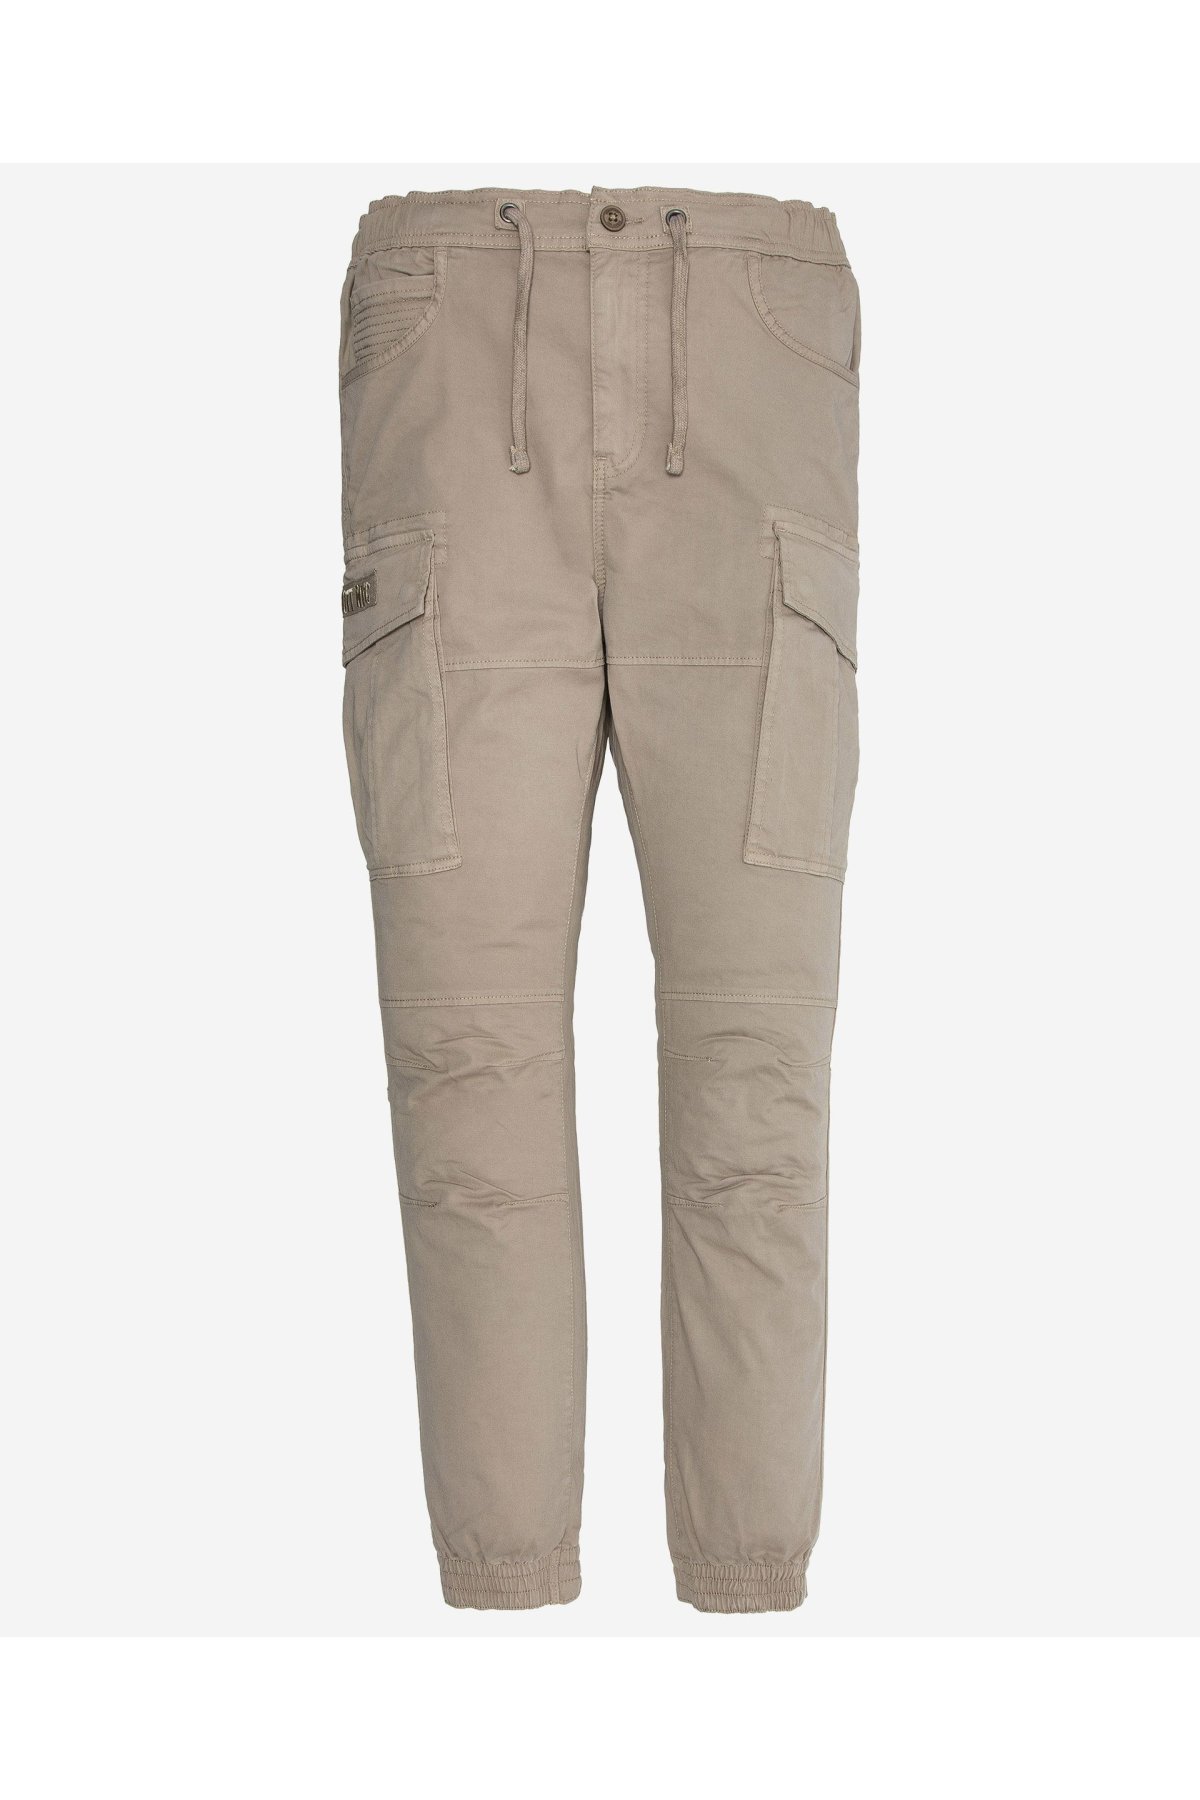 Schott NYC TRRELAX70 kalhoty béžové